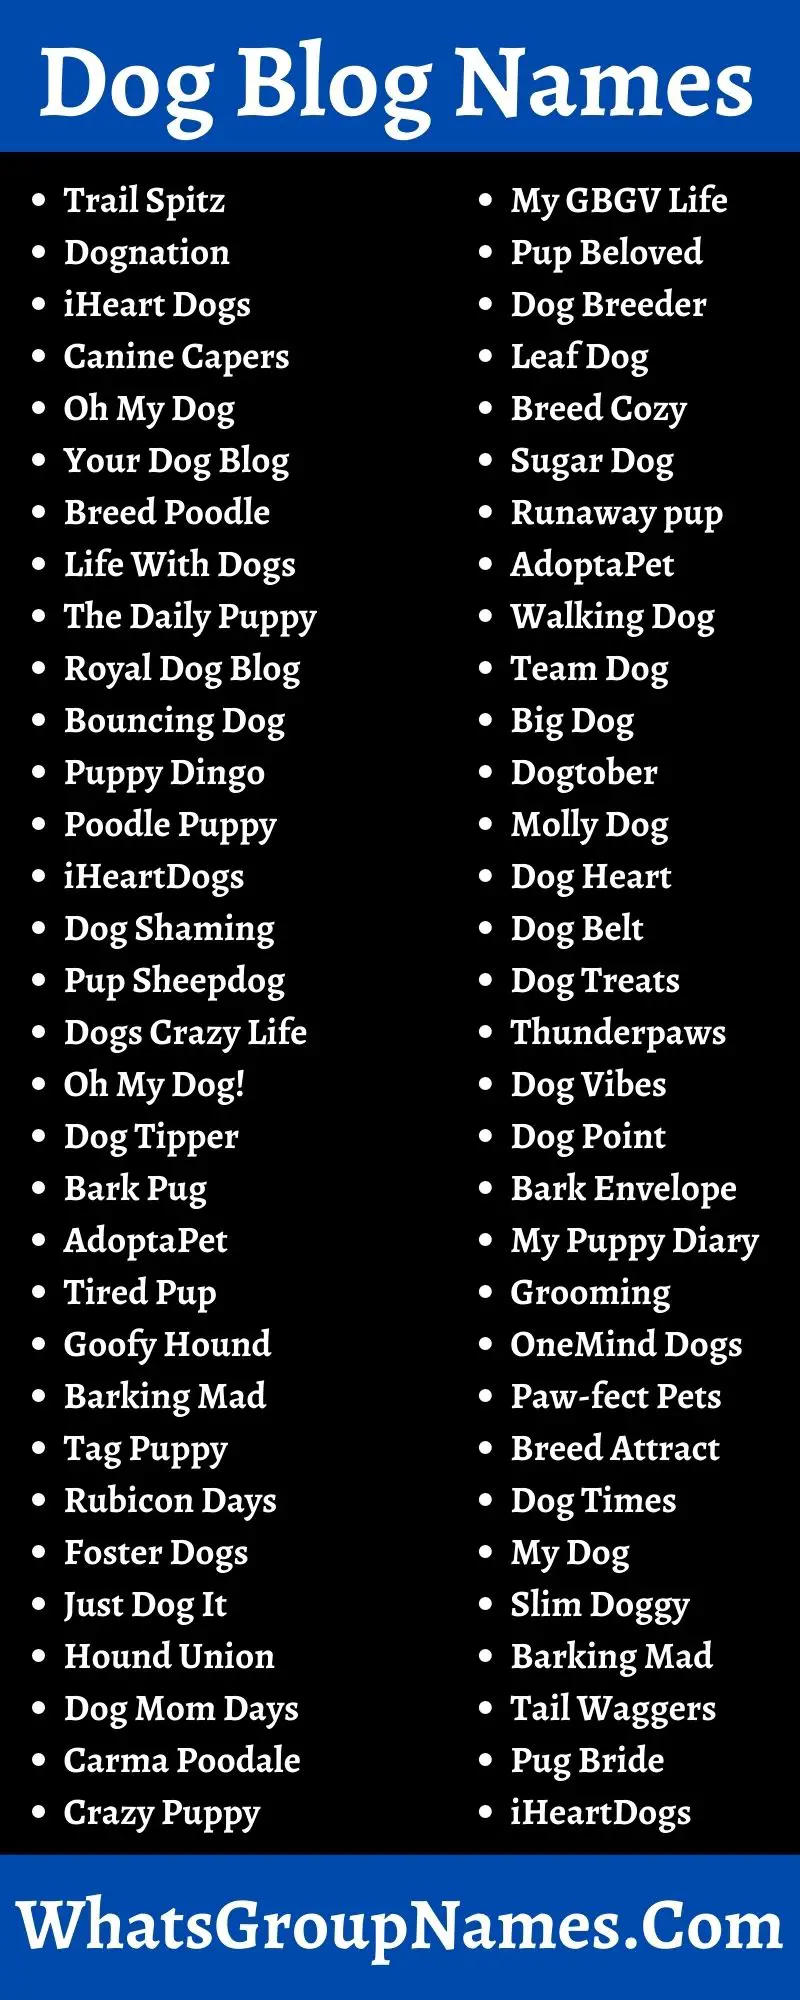 Dog Blog Names